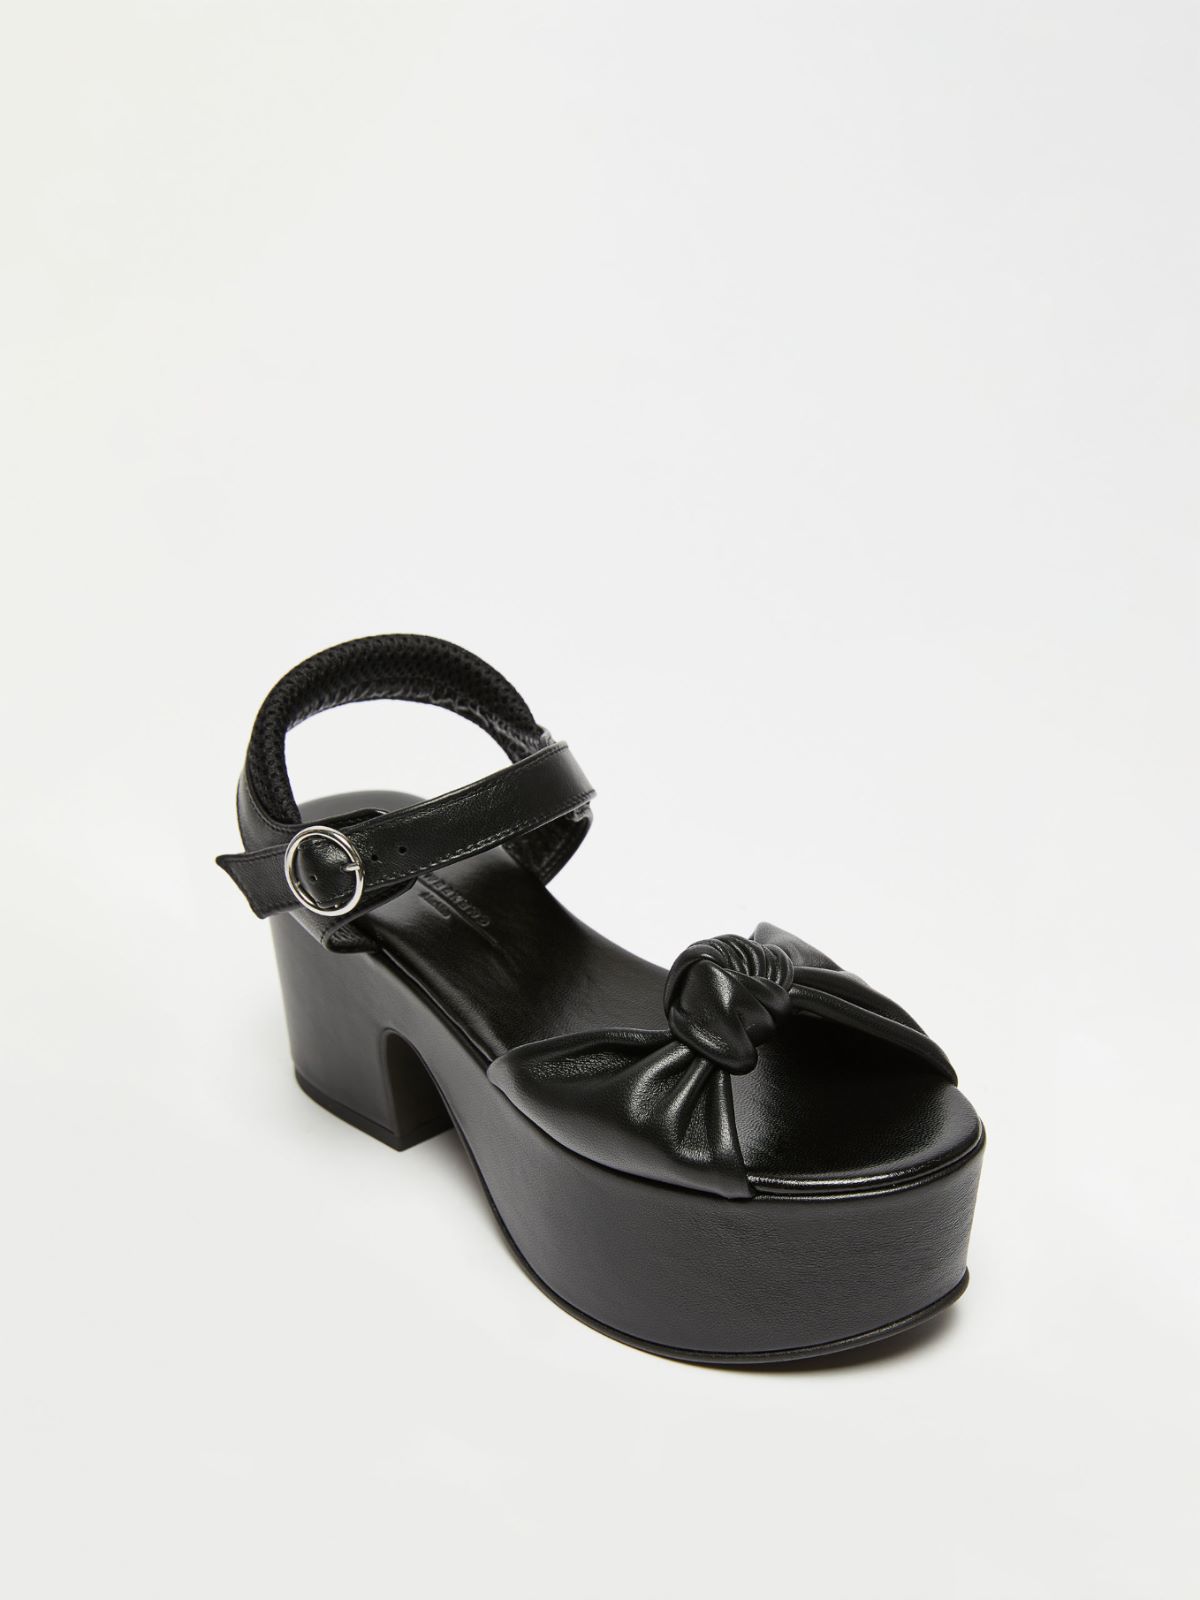 Nappa leather sandals - BLACK - Weekend Max Mara - 4